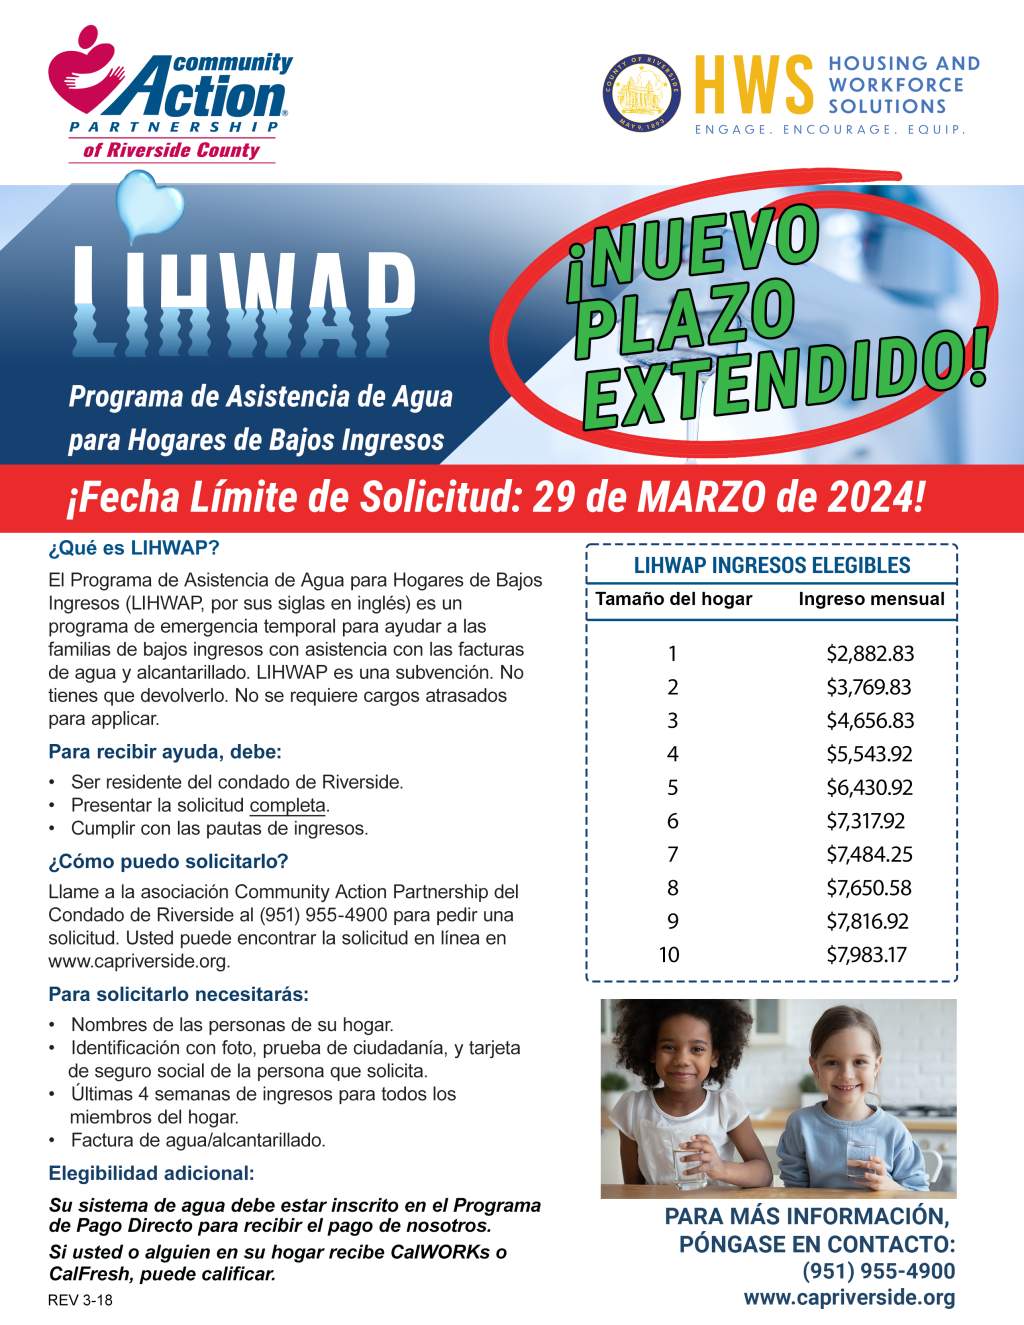 LIHWAP Extended Deadline